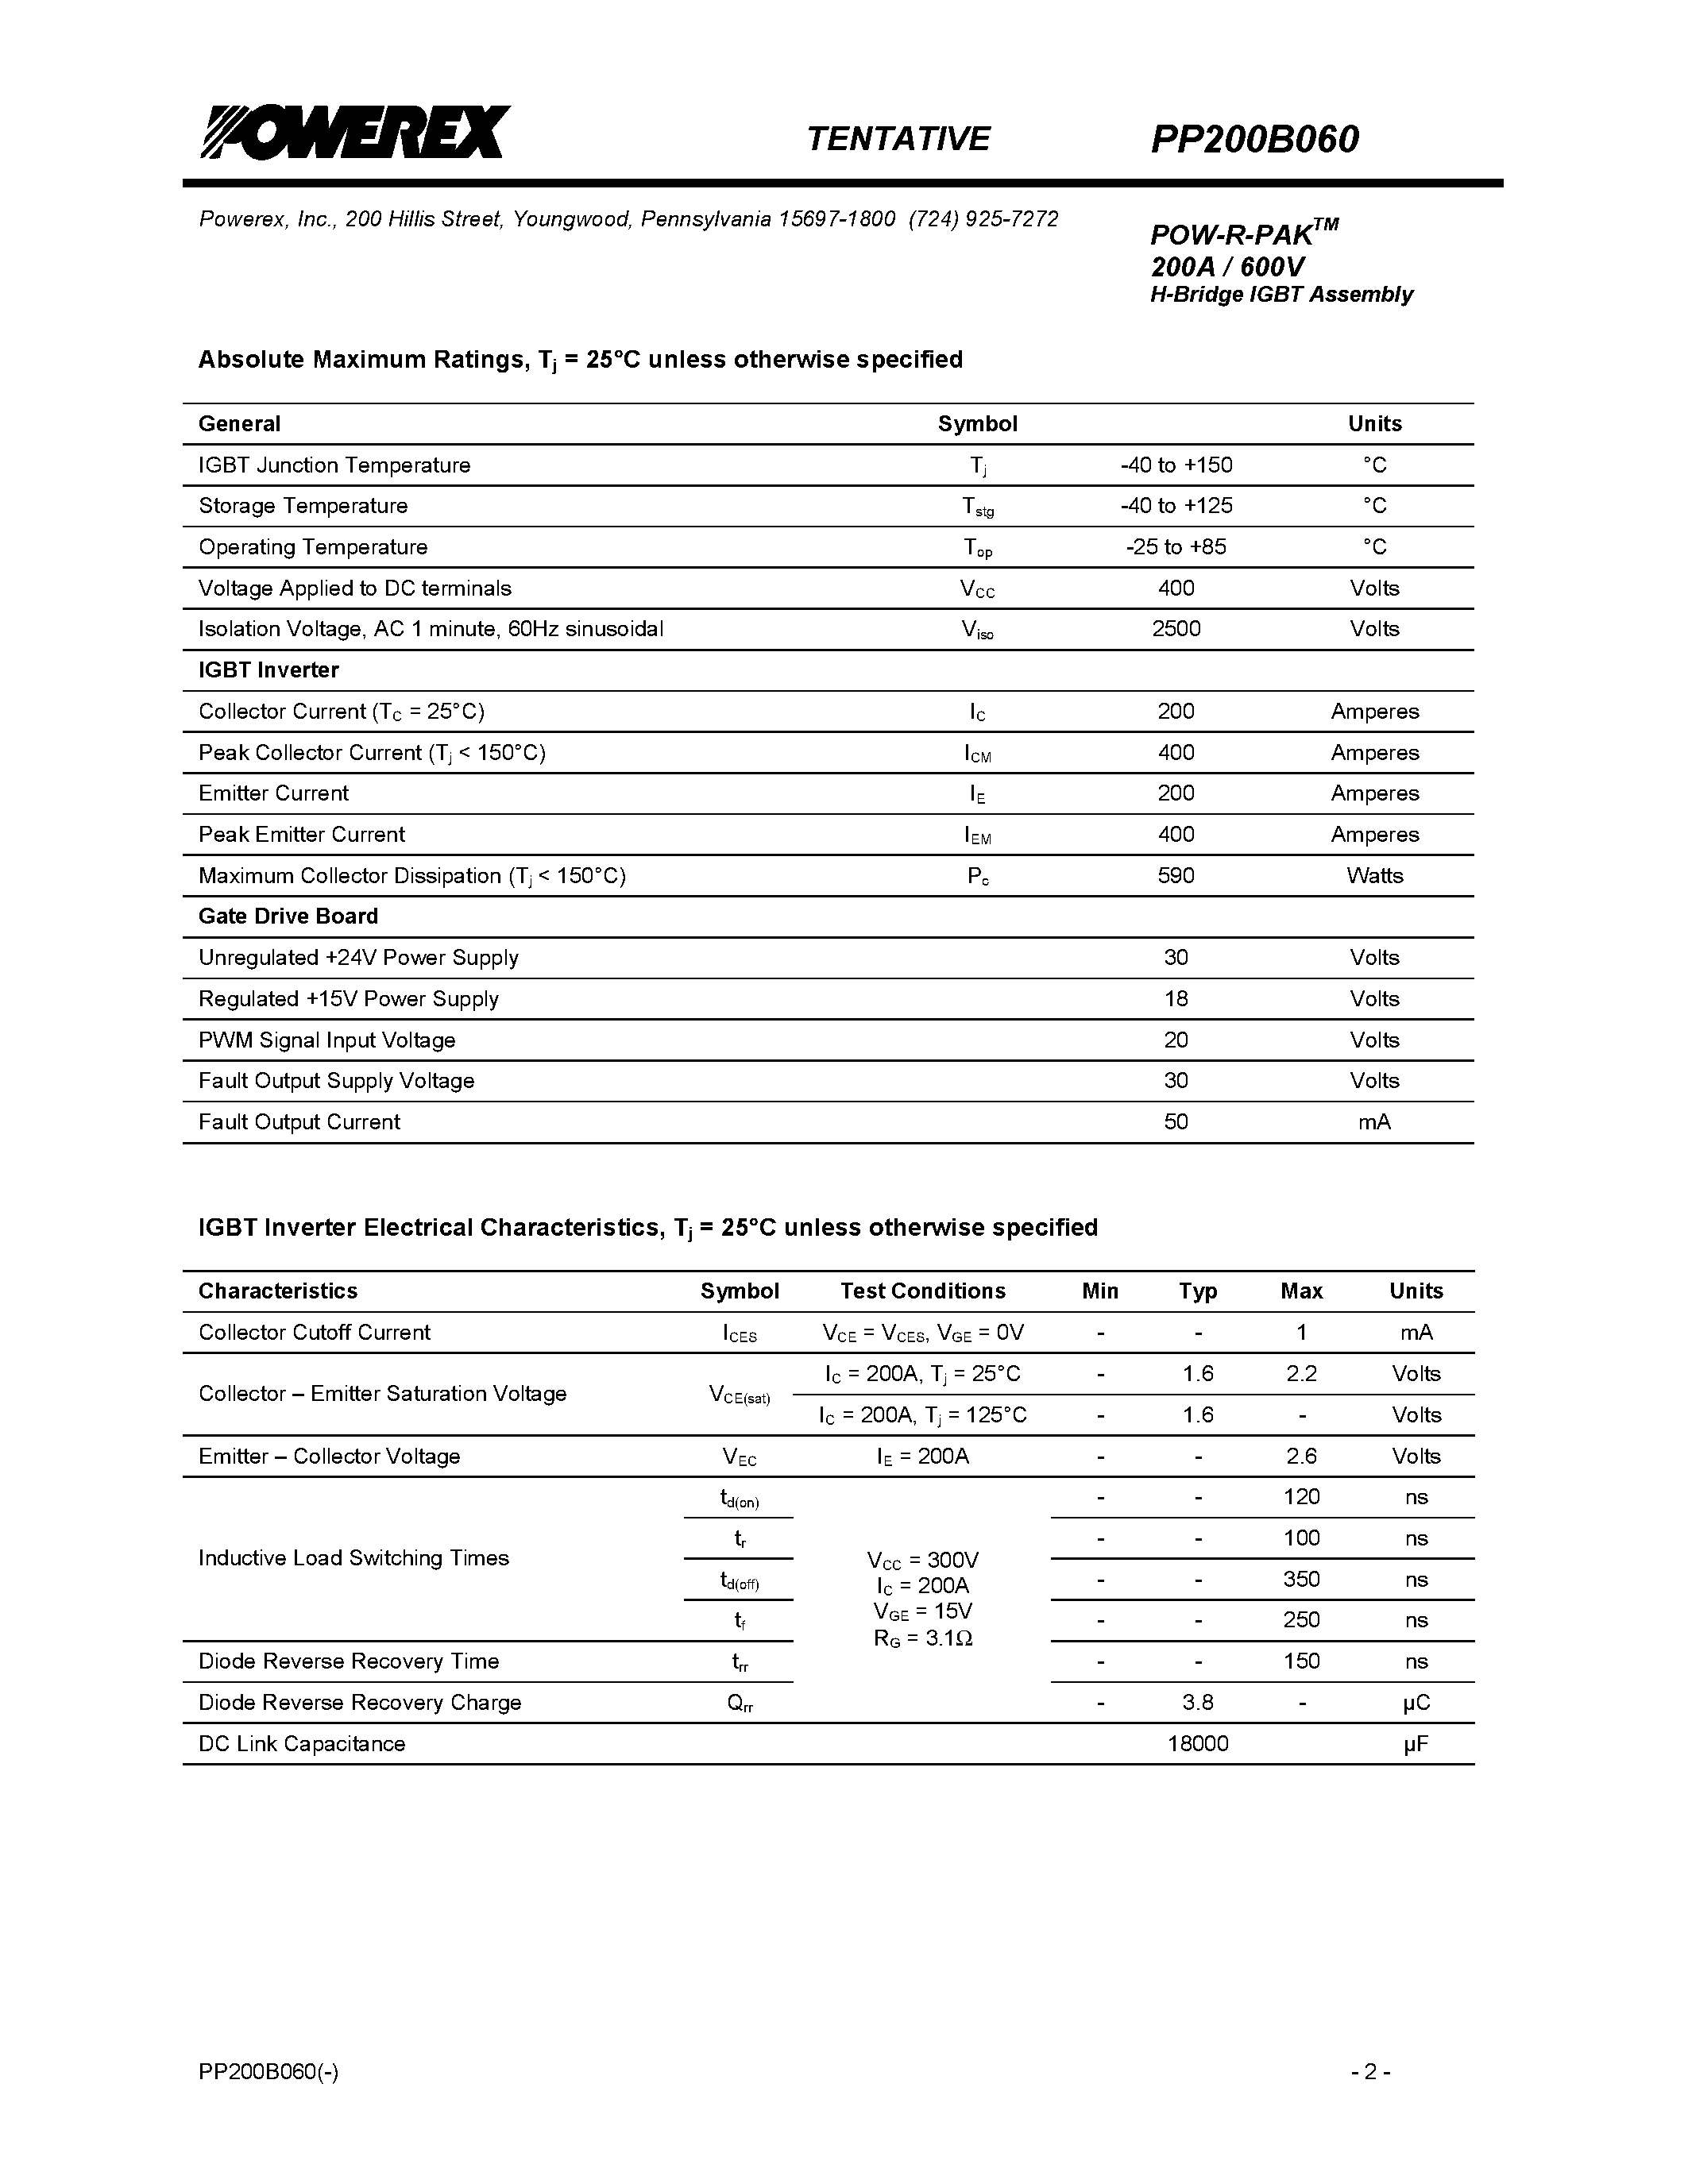 Datasheet PP200B060 - POW-R-PAK 200A / 600V H-Bridge IGBT Assembly page 2